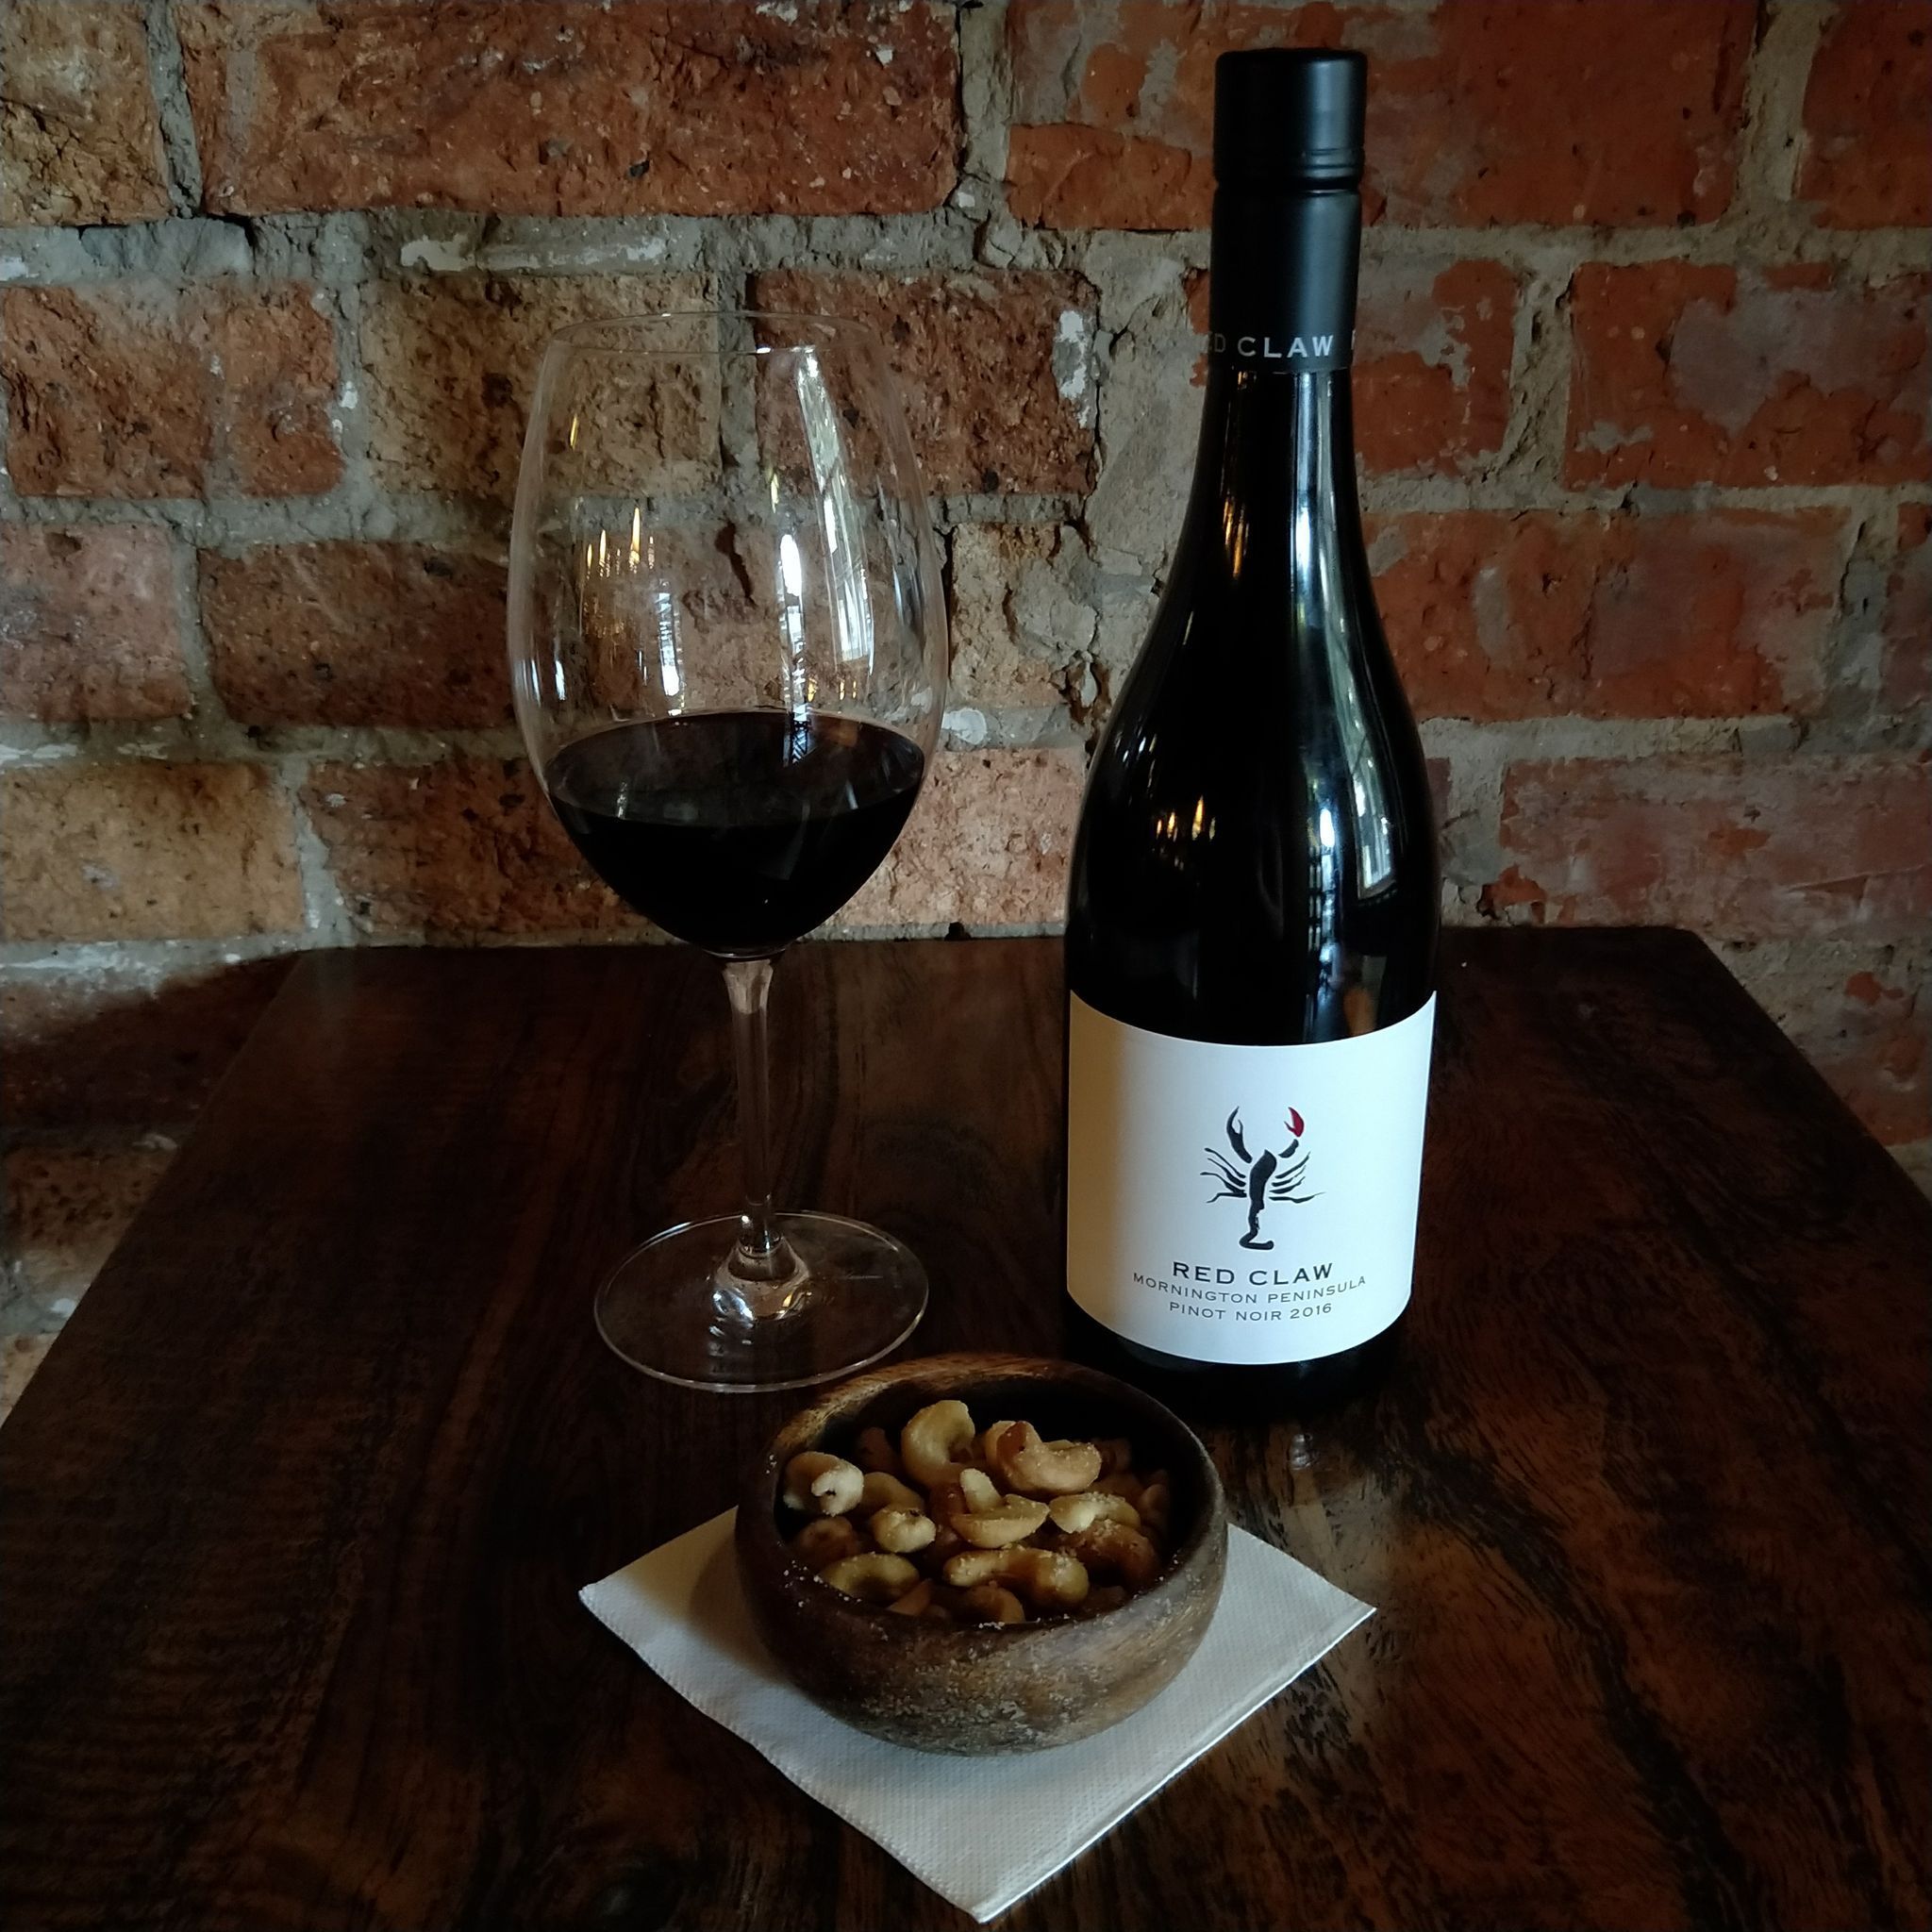 Malt Dining on Twitter: "New wine by the glass: 2016 Yabby Lake Vineyard - Peninsula Claw Pinot Noir. Absolutely superb! https://t.co/2zIK1brlHJ" / Twitter